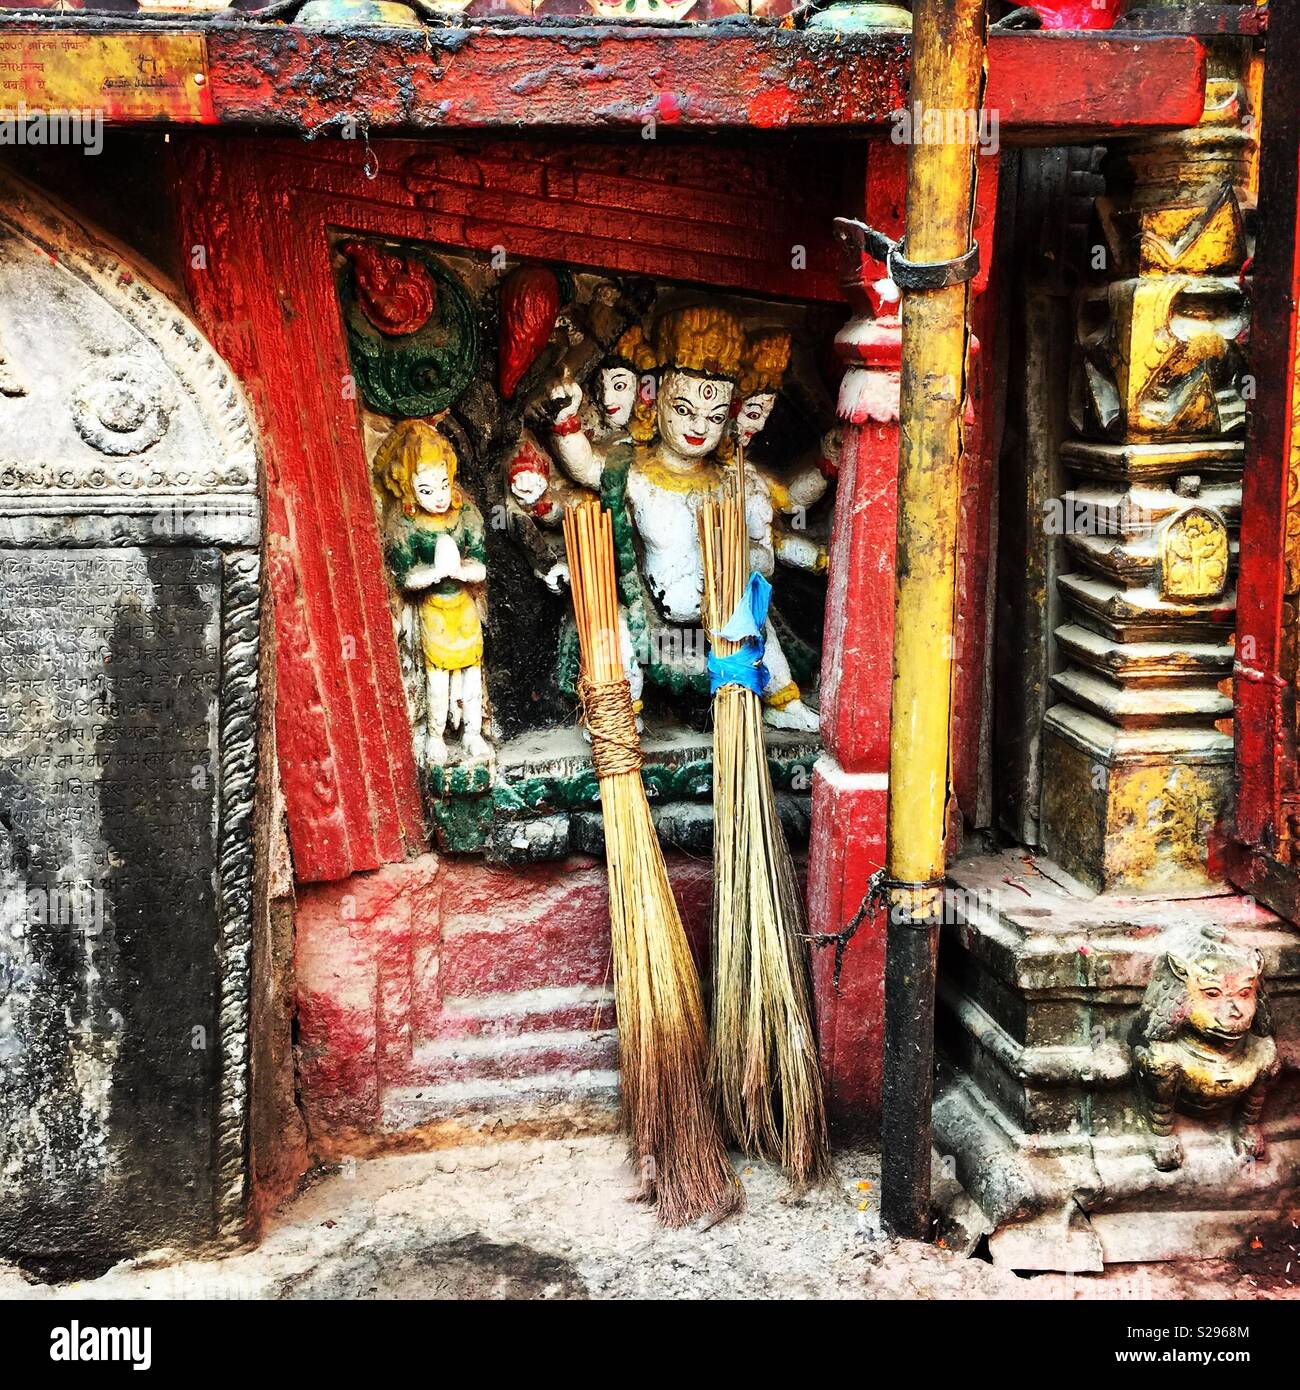 Religious sculpture, Nepal Stock Photo